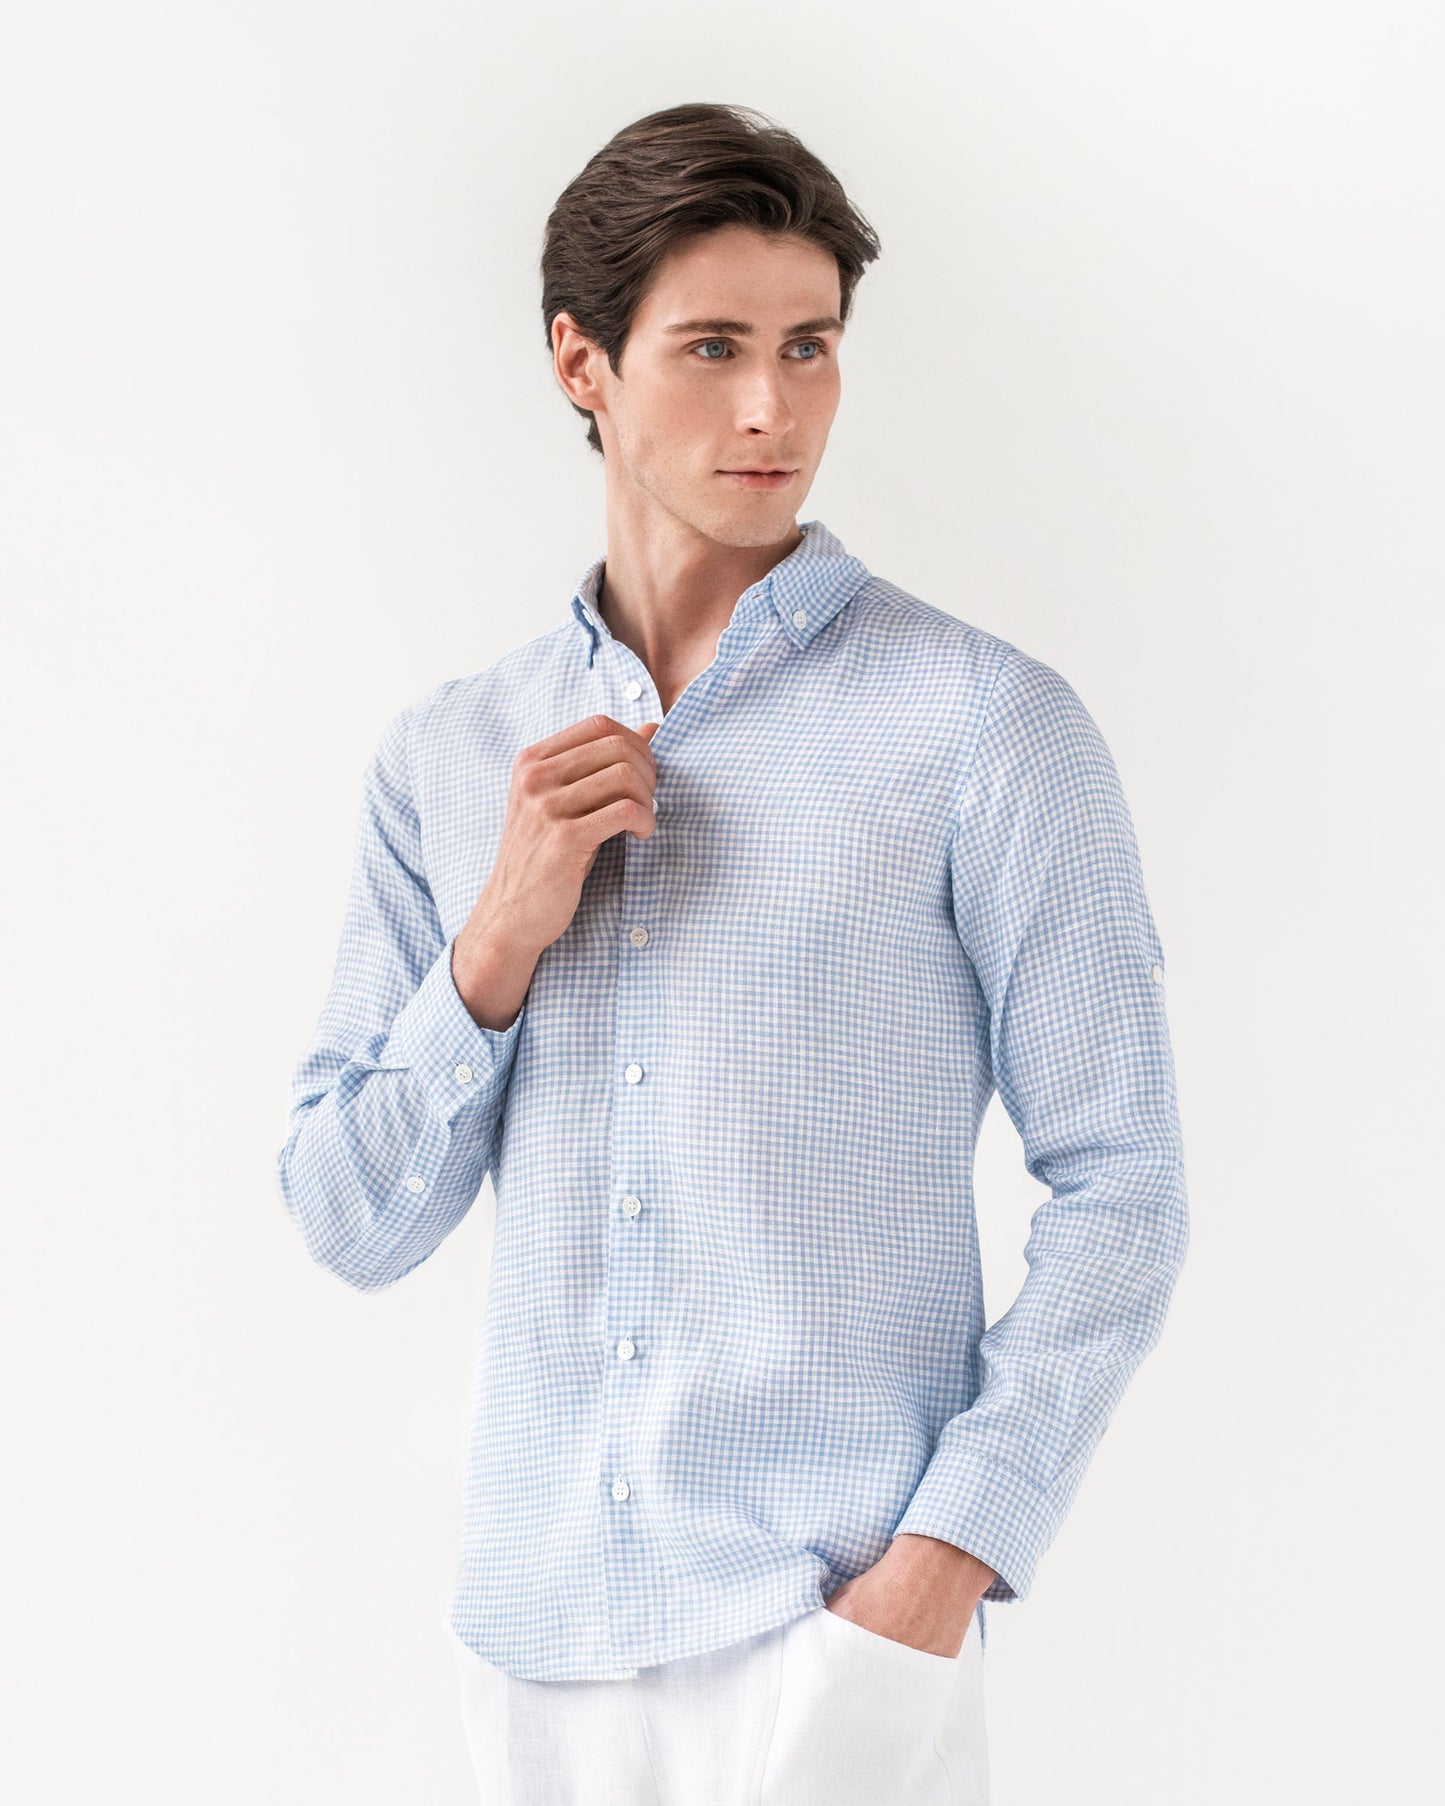 Men's linen shirt CORONADO in blue gingham - MagicLinen